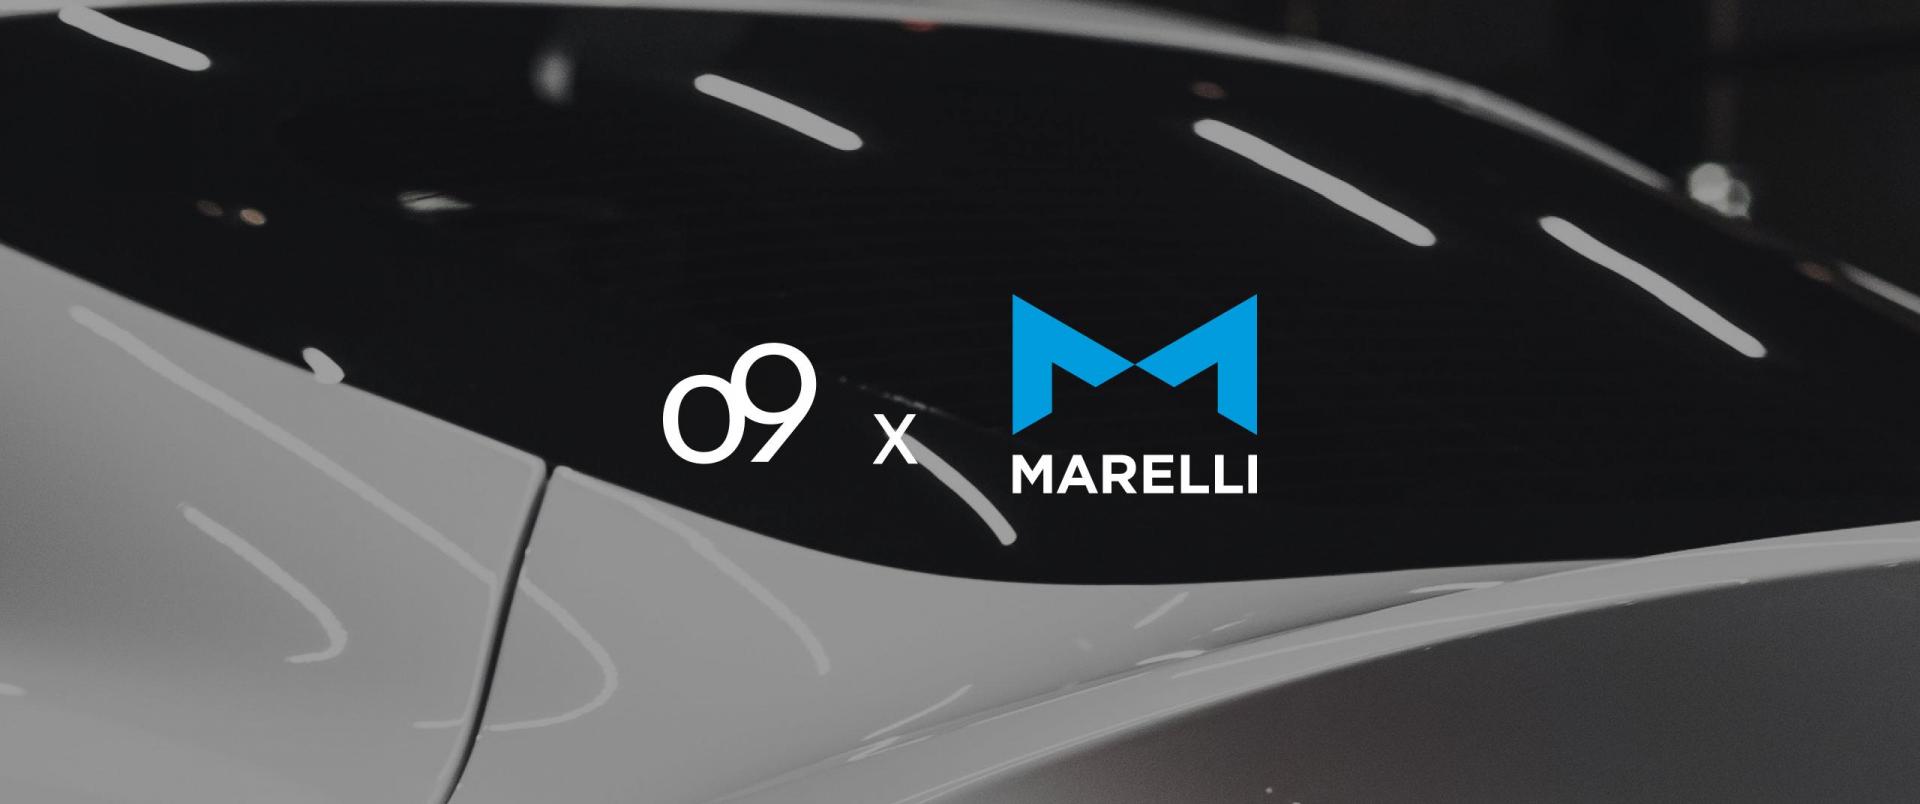 o9 Solutions Helps Marelli Digitally Transform Its Business